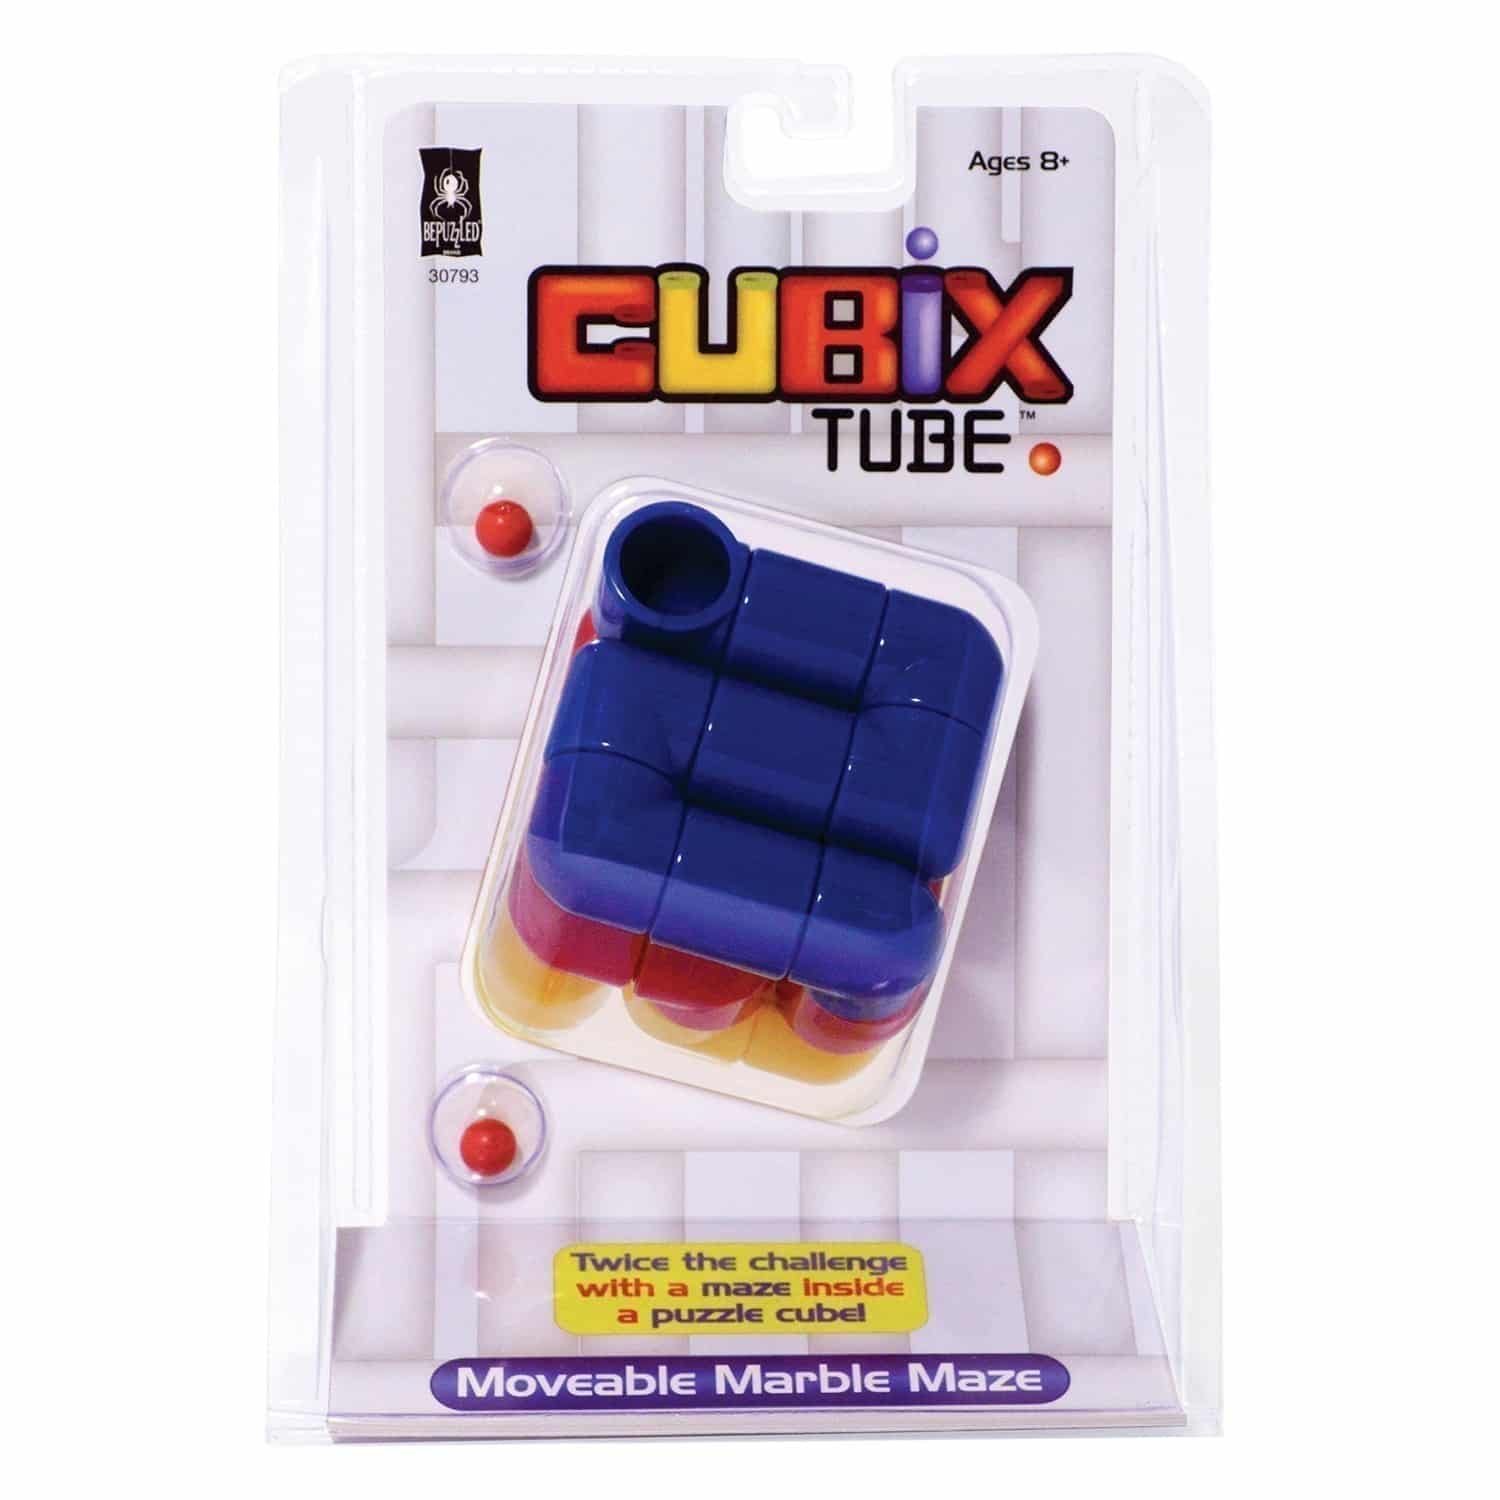 Cubix Tube